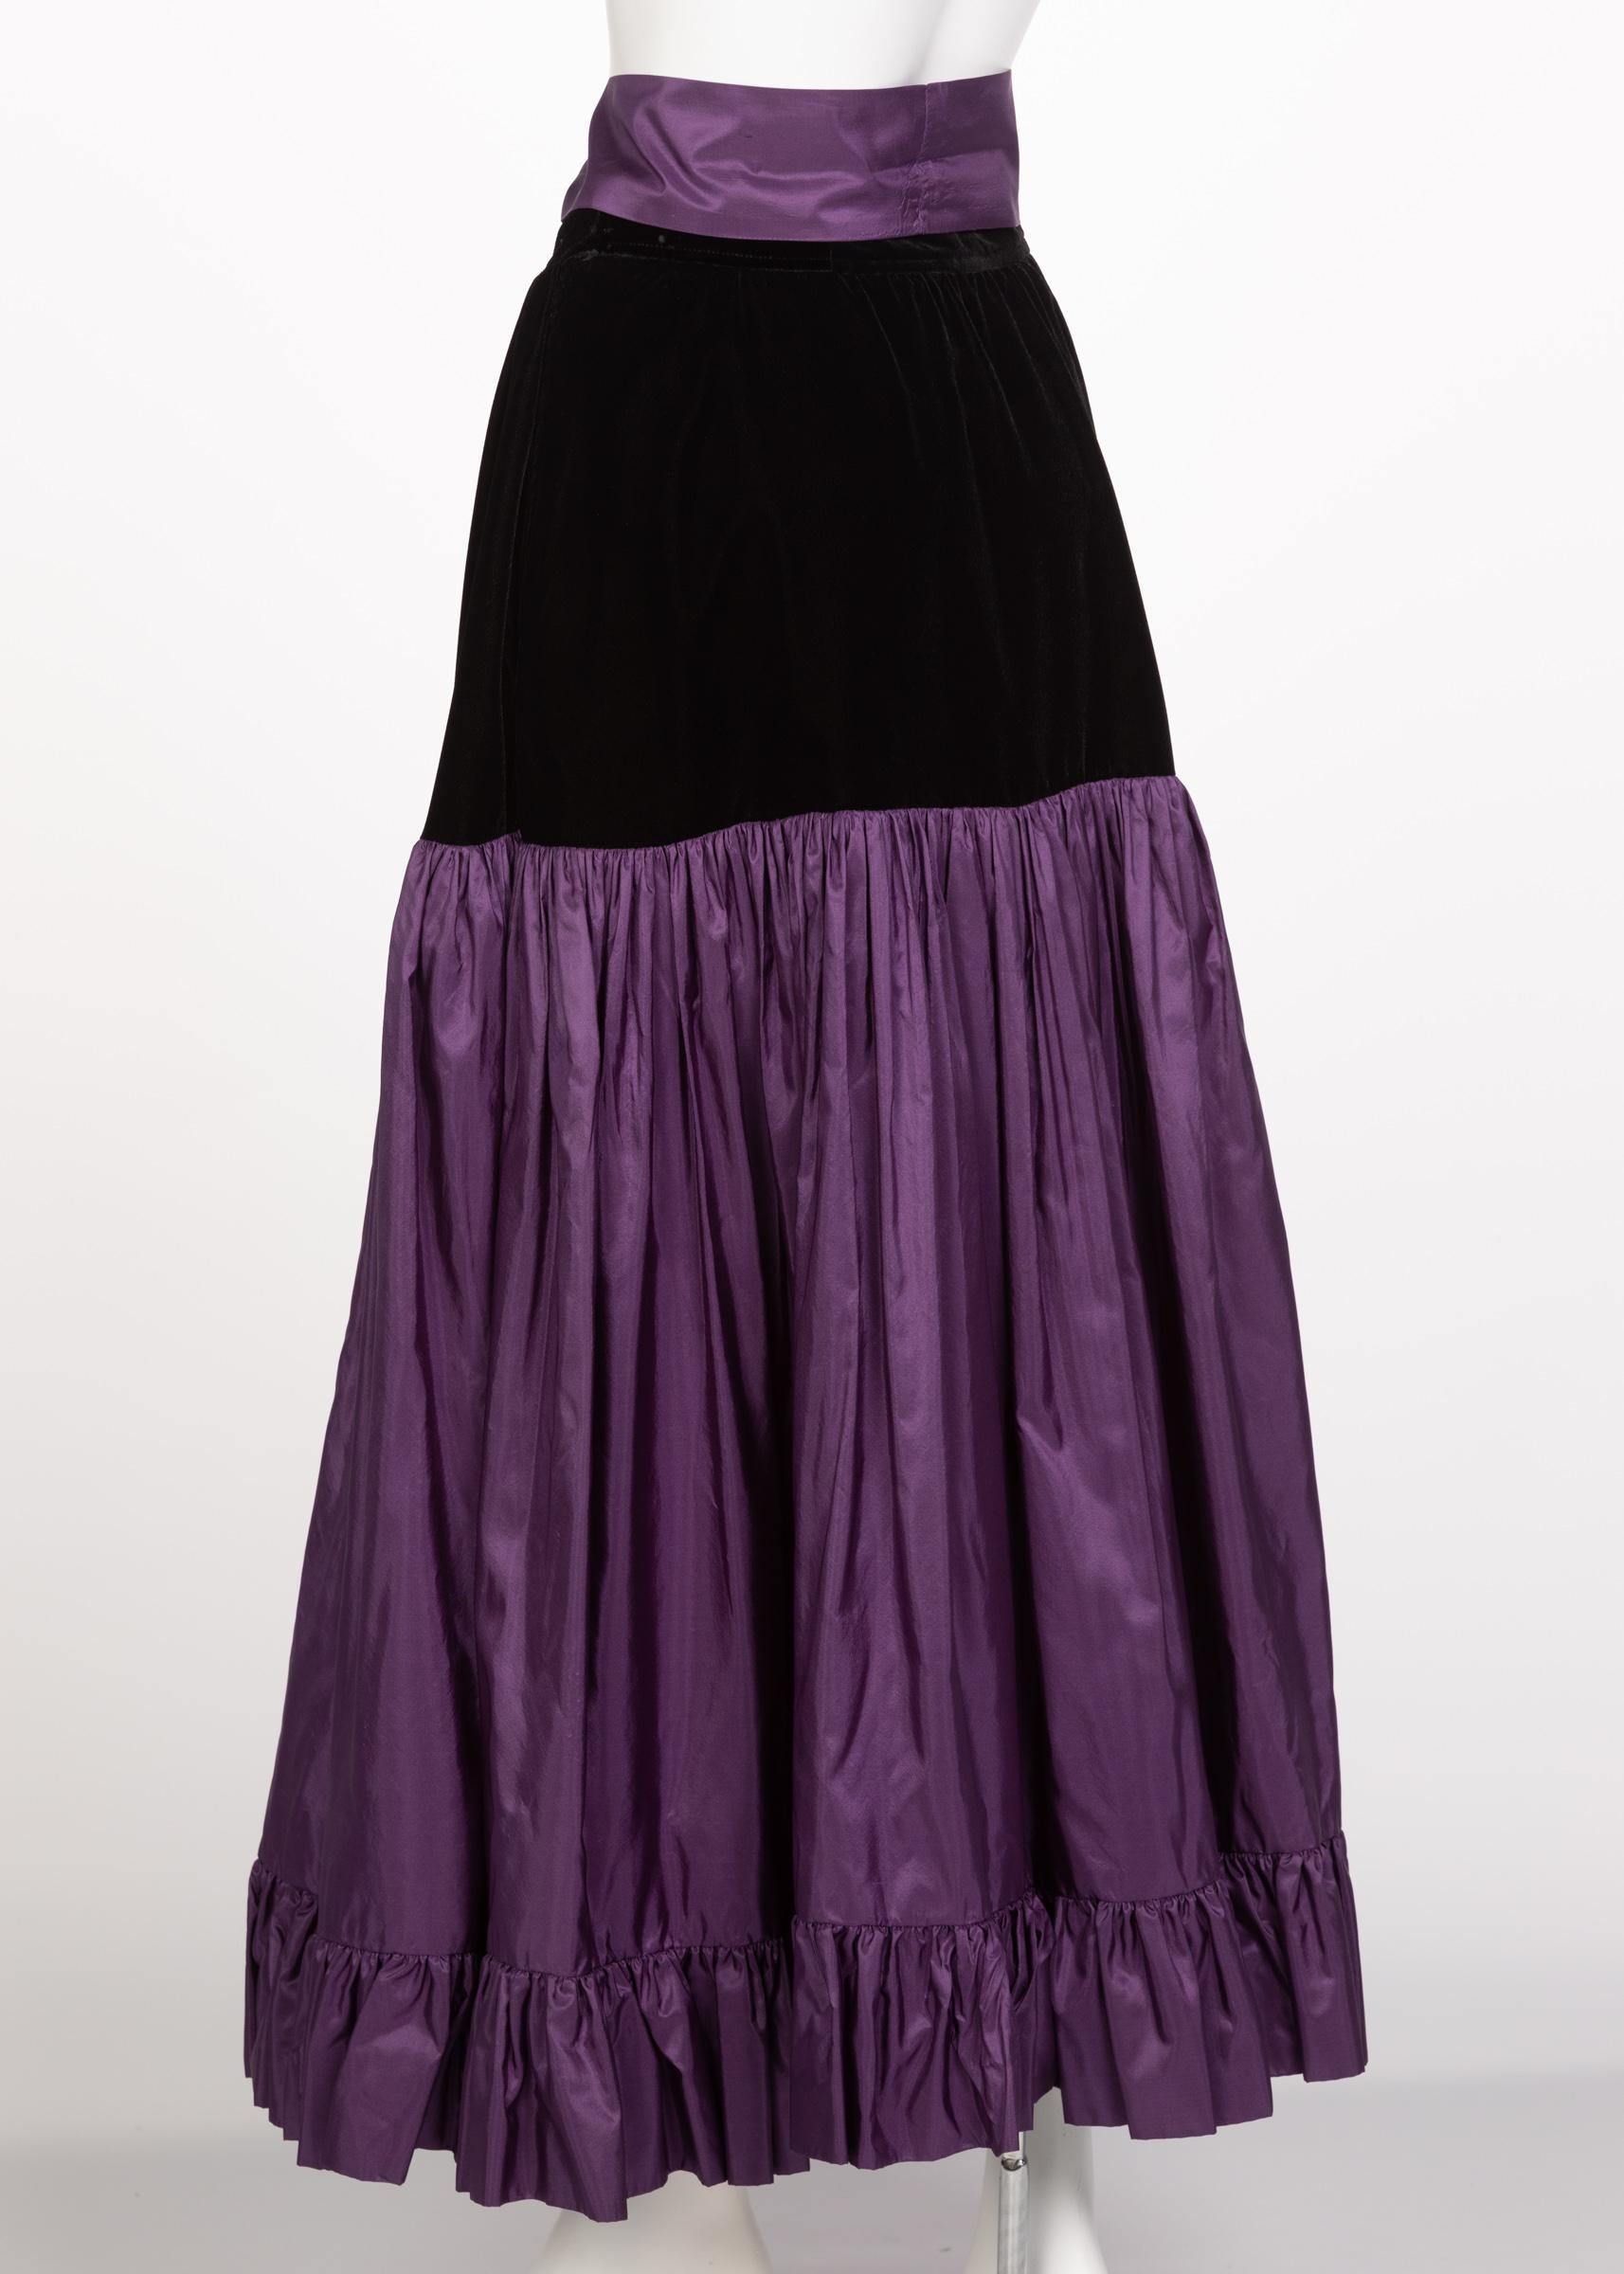 Yves Saint Laurent Skirt Russian Collection Purple Skirt YSL, 1970s For ...